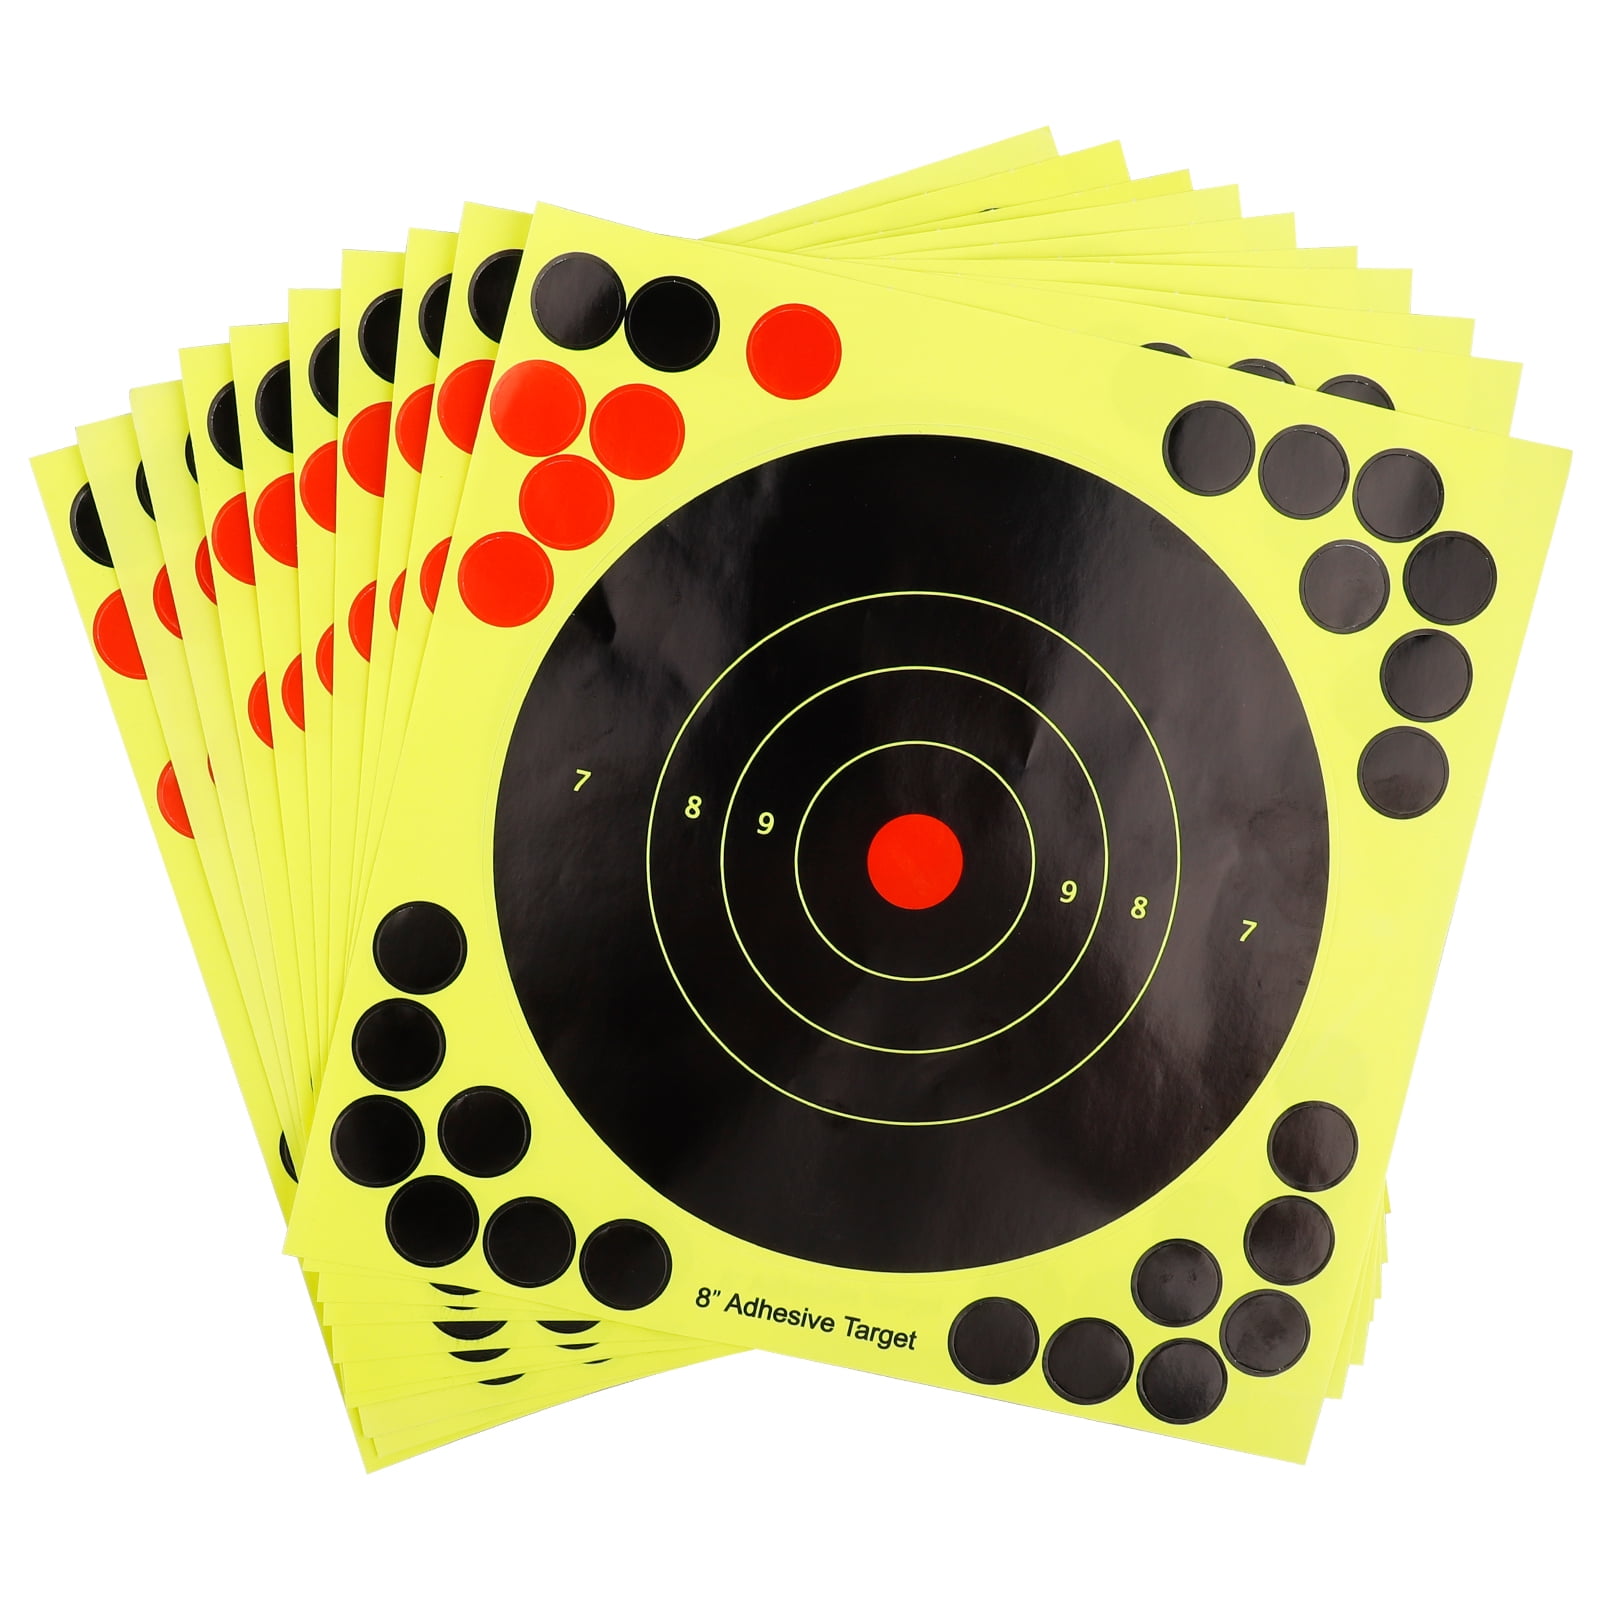 10pcs Adhesive Reactivity Shoot Target Aim Hunting Training Target Sticker 